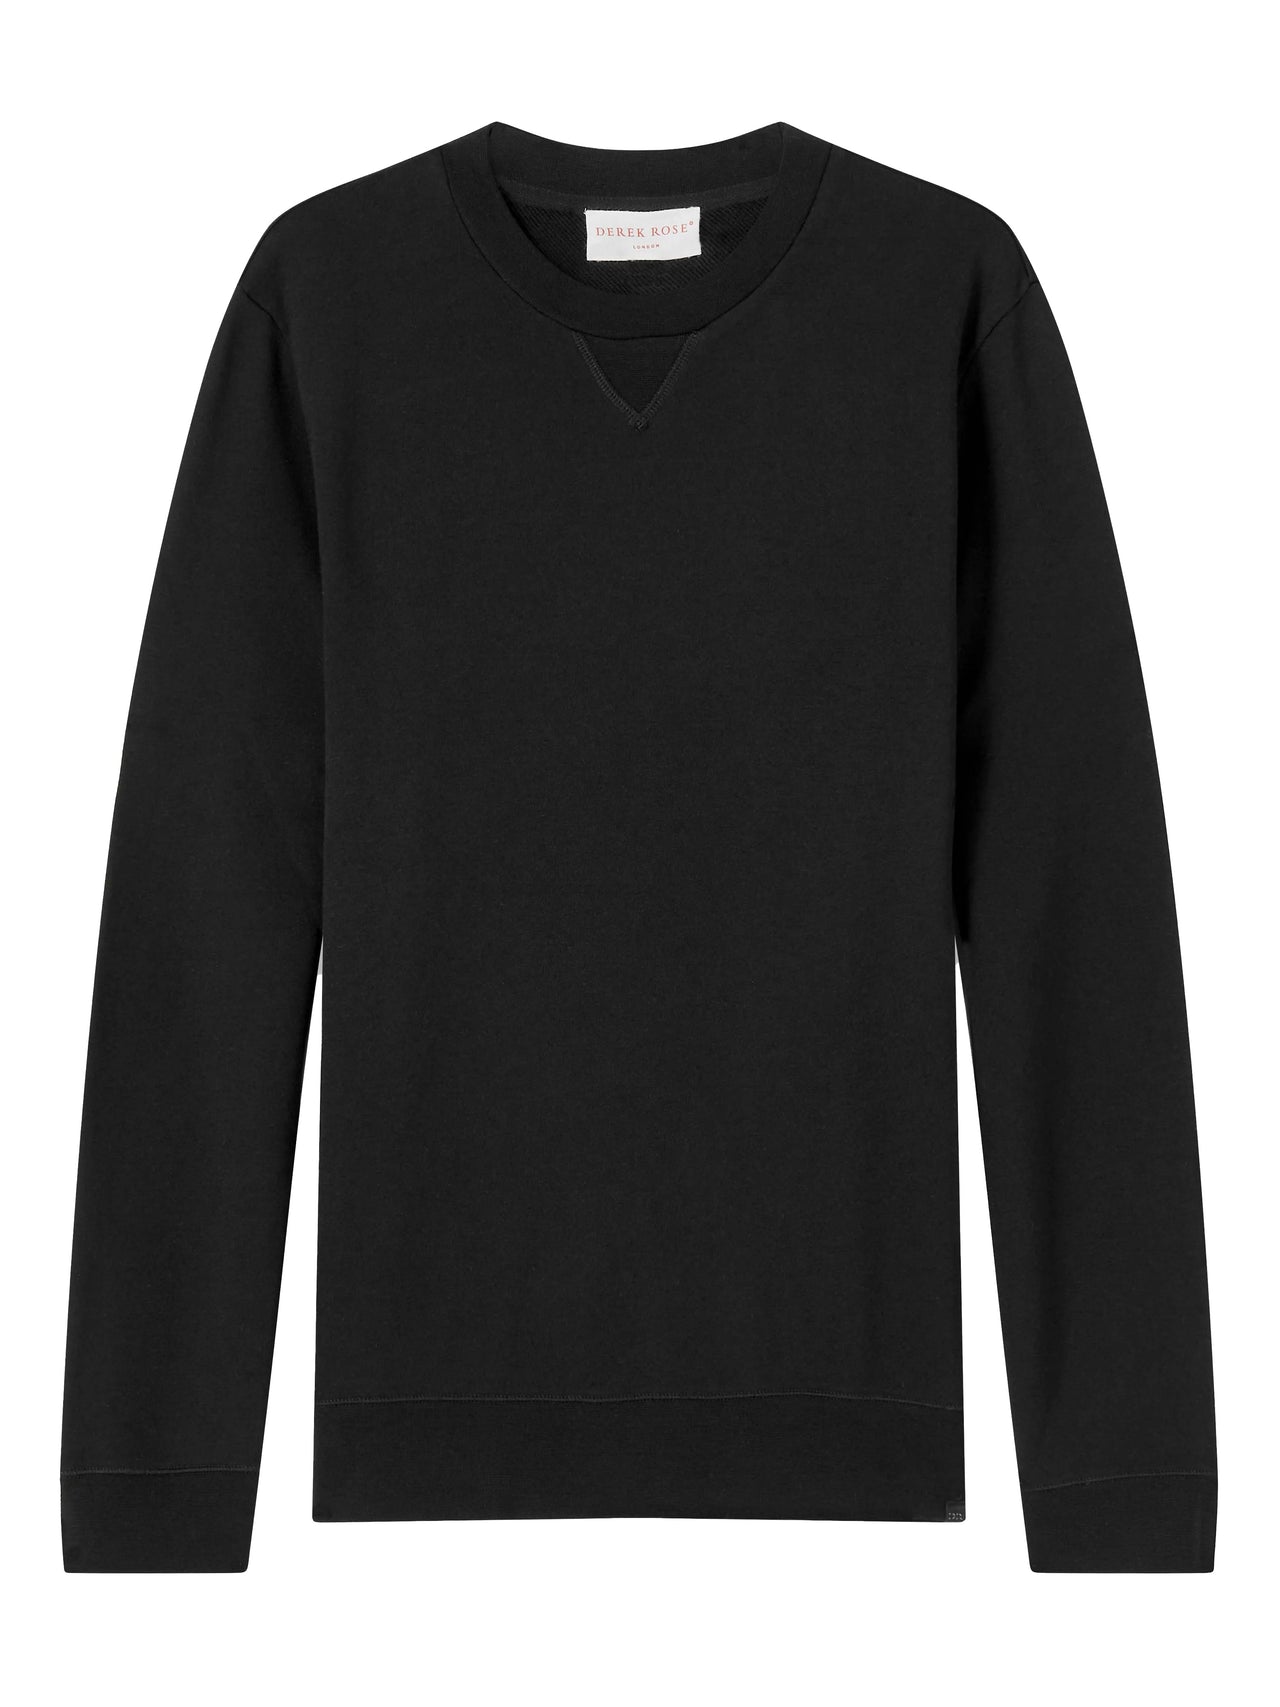 DEREK ROSE Quinn Cotton Modal Men's Sweatshirt BLACK